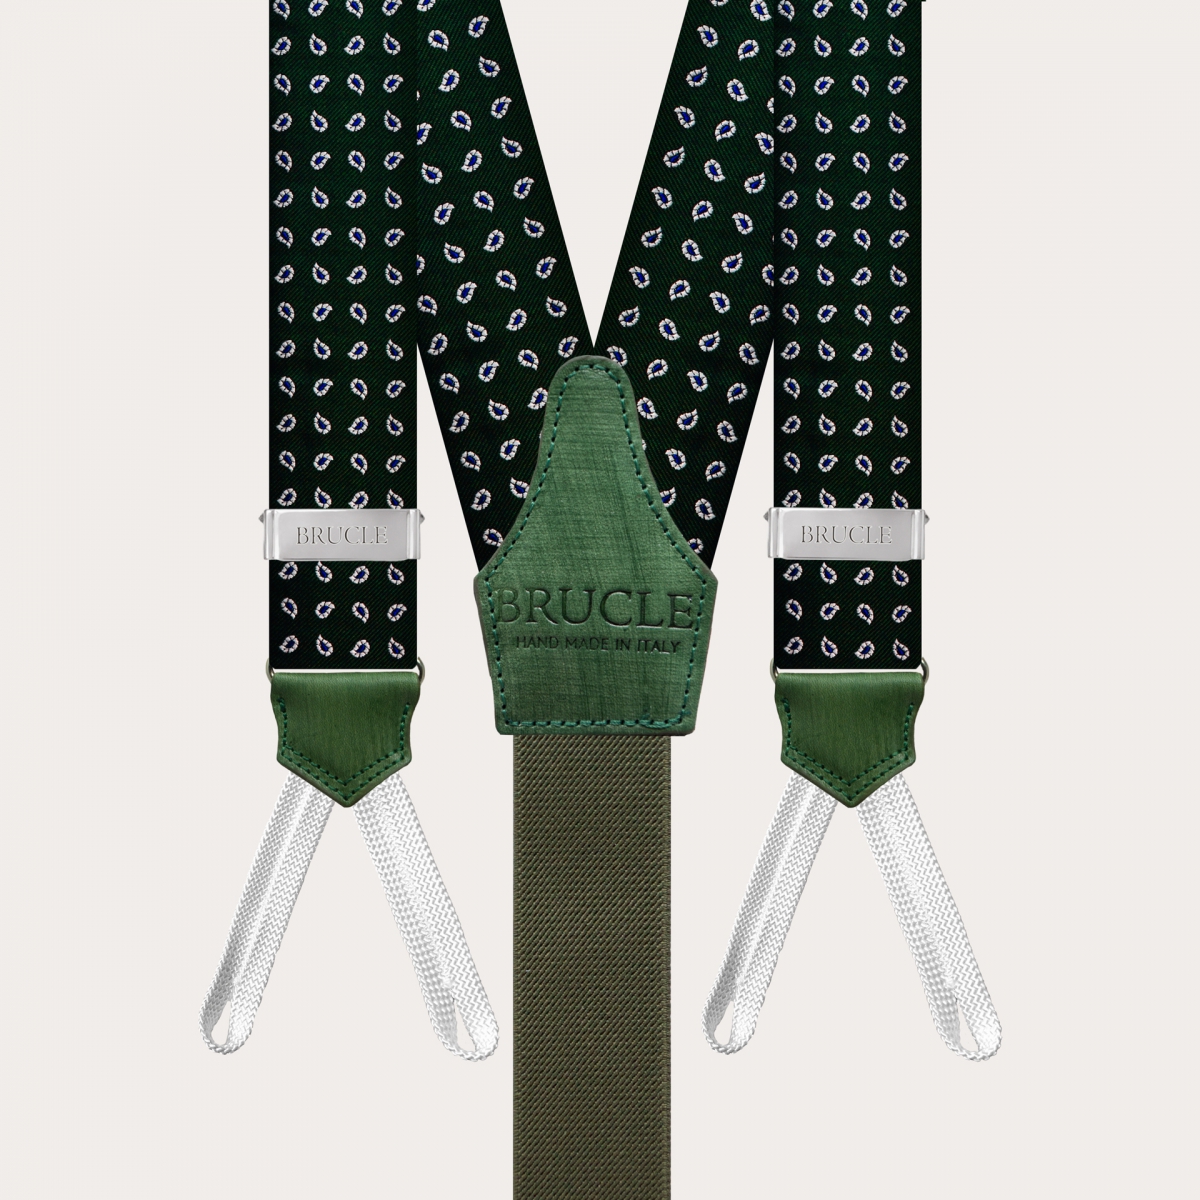 BRUCLE Formal Y-shape suspenders with braid runners, green paisley